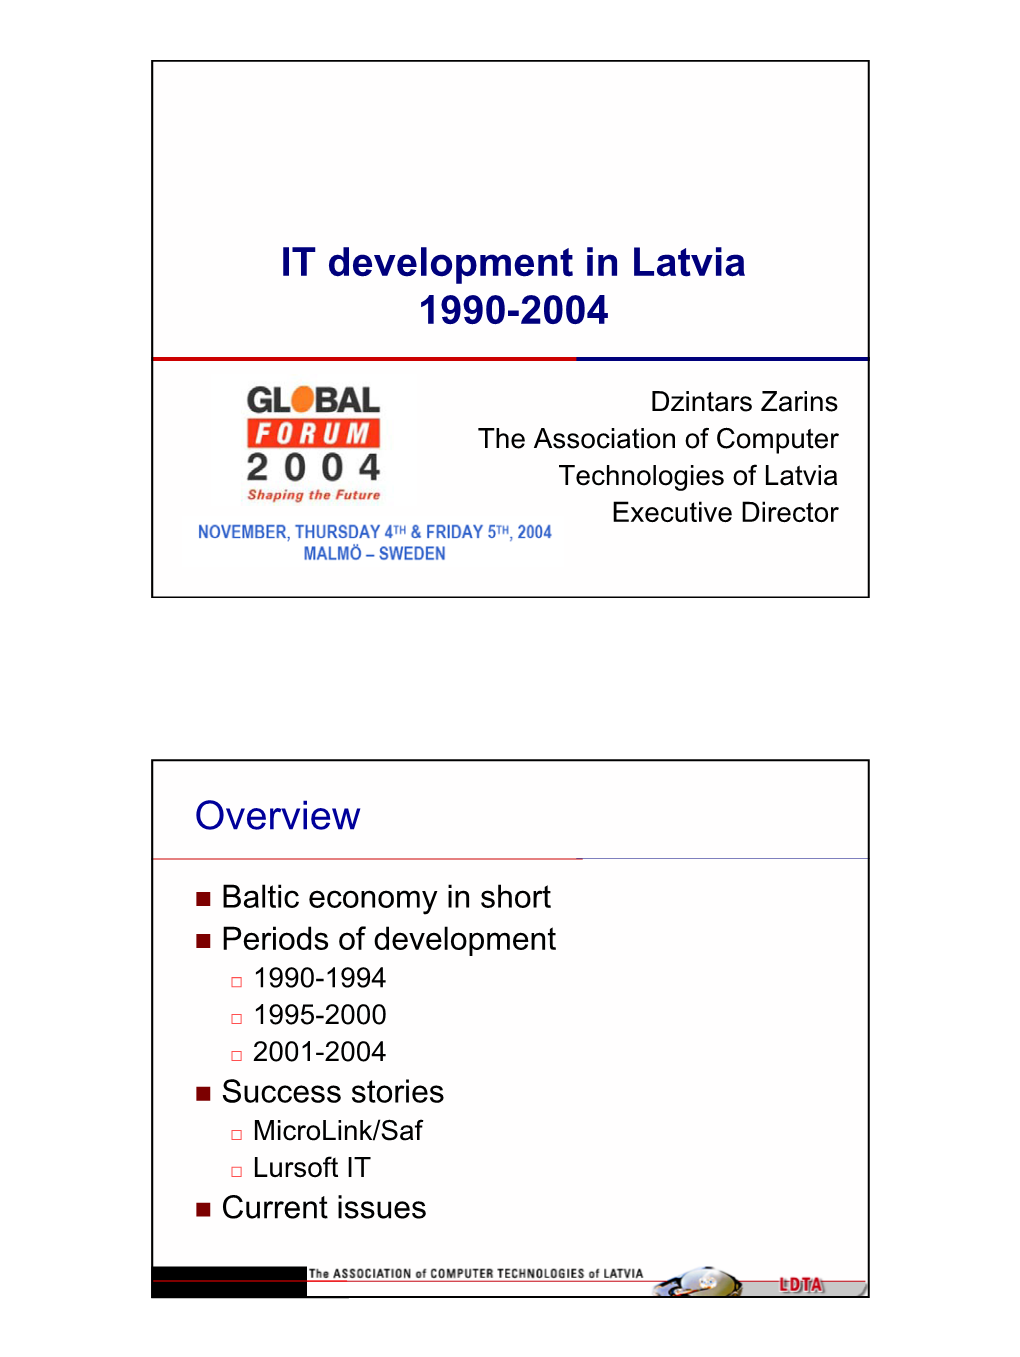 IT Development in Latvia 1990-2004 Overview